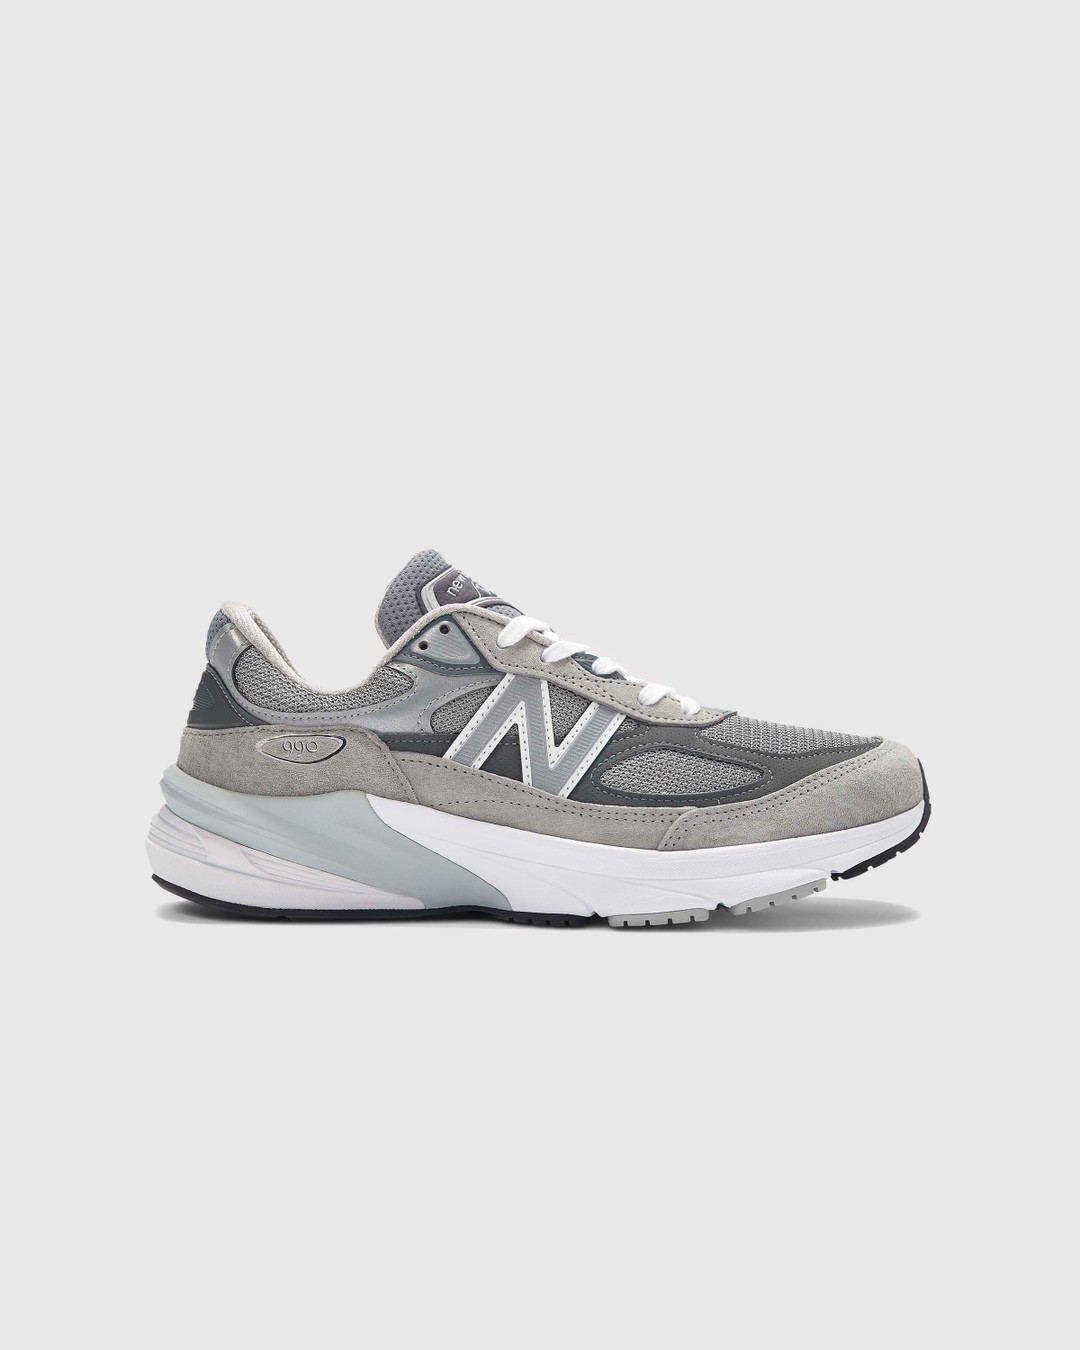 New Balance – M990v6 Cool Gray  - Sneakers - Grey - Image 1